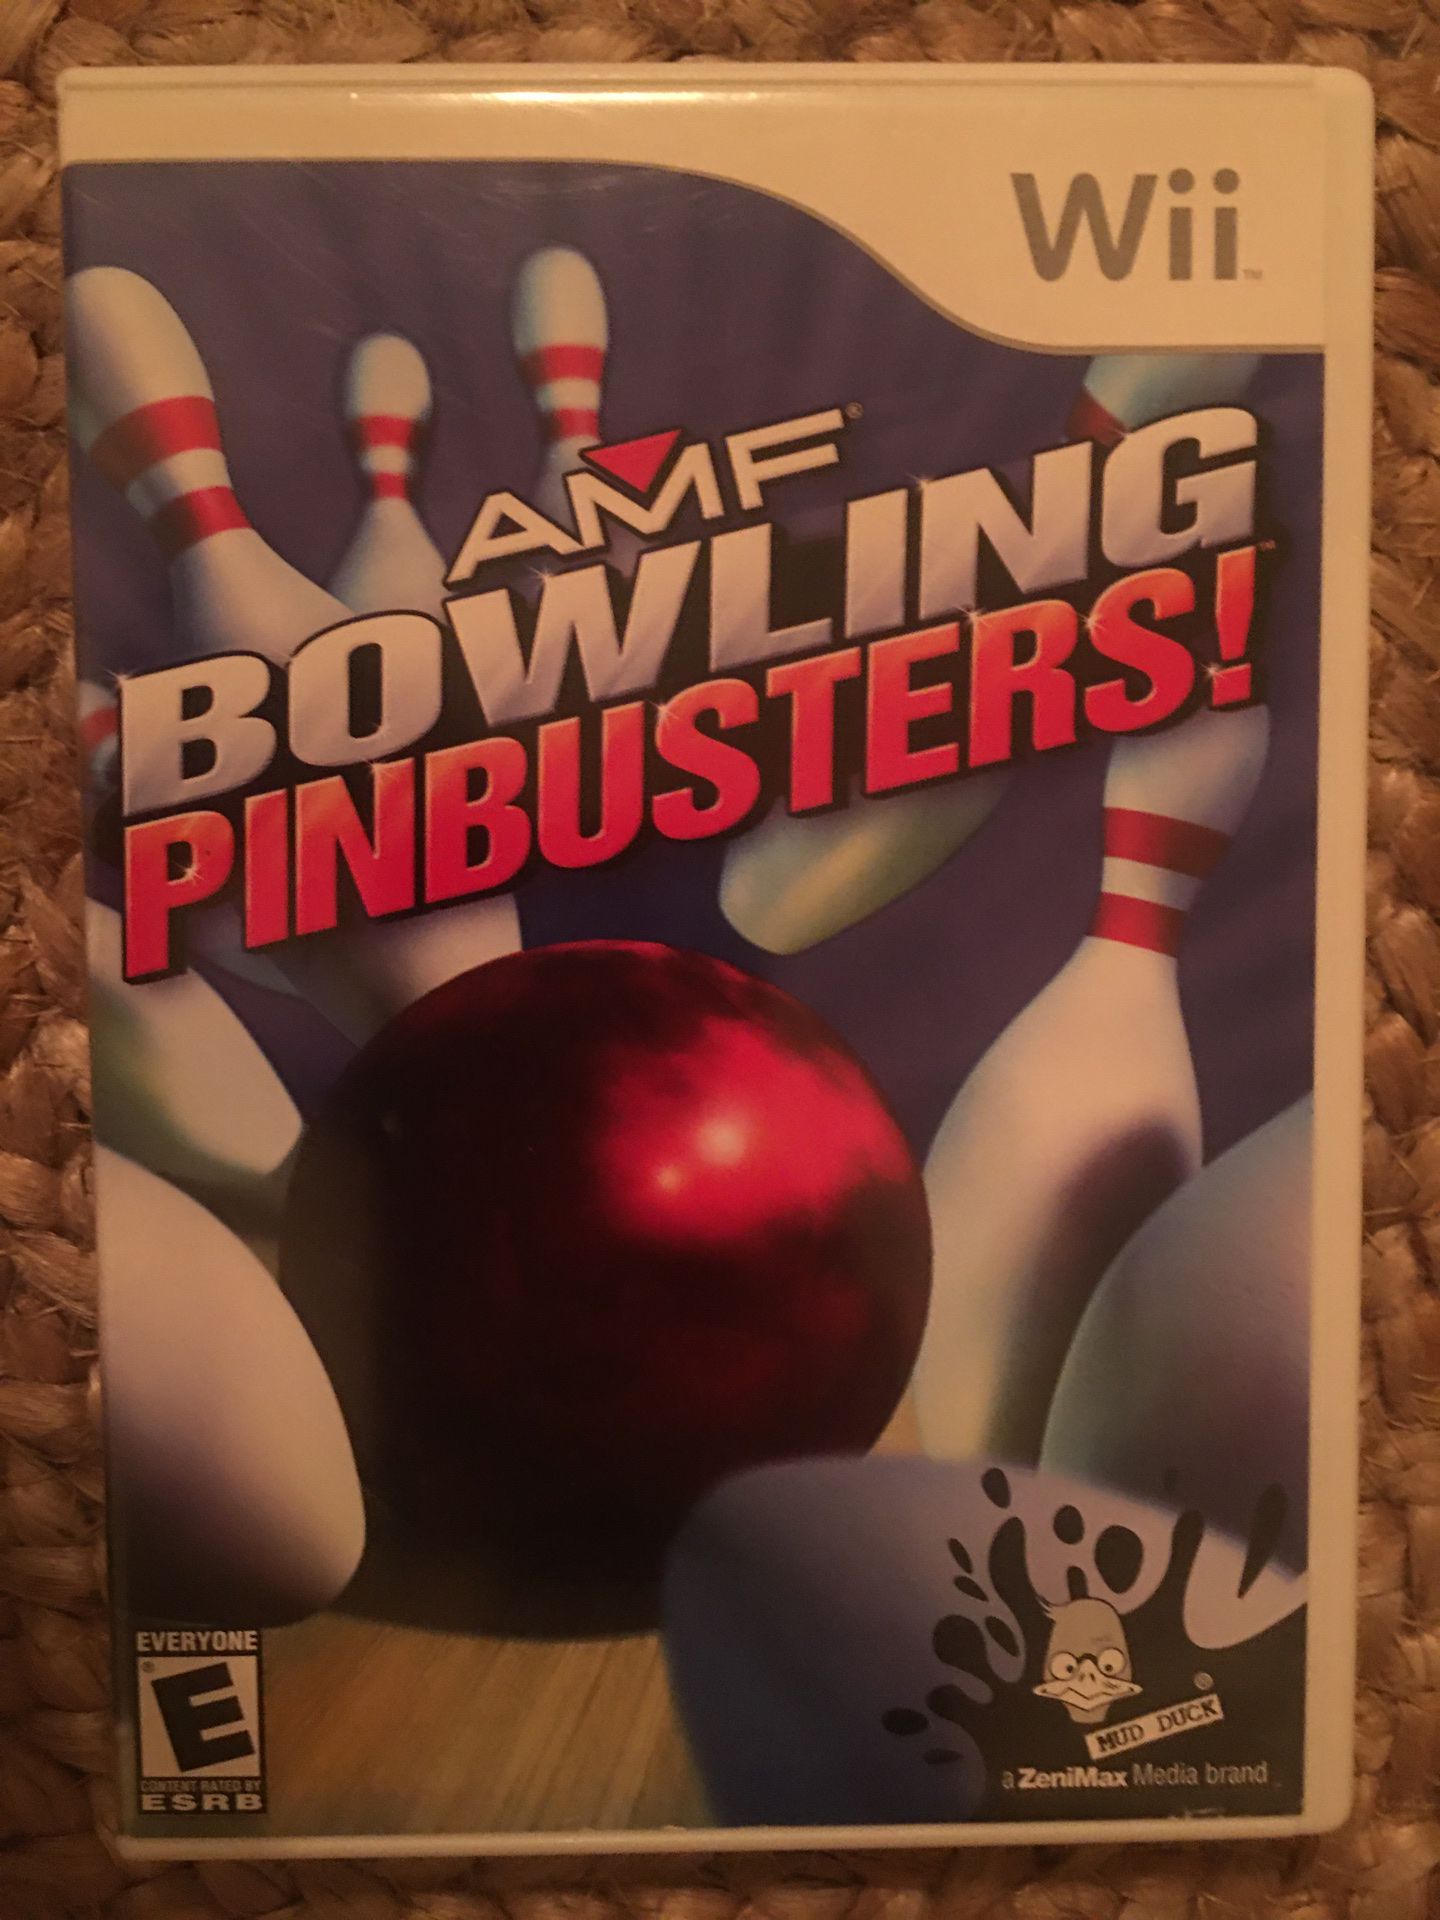 Nintendo Wii bowling pin busters